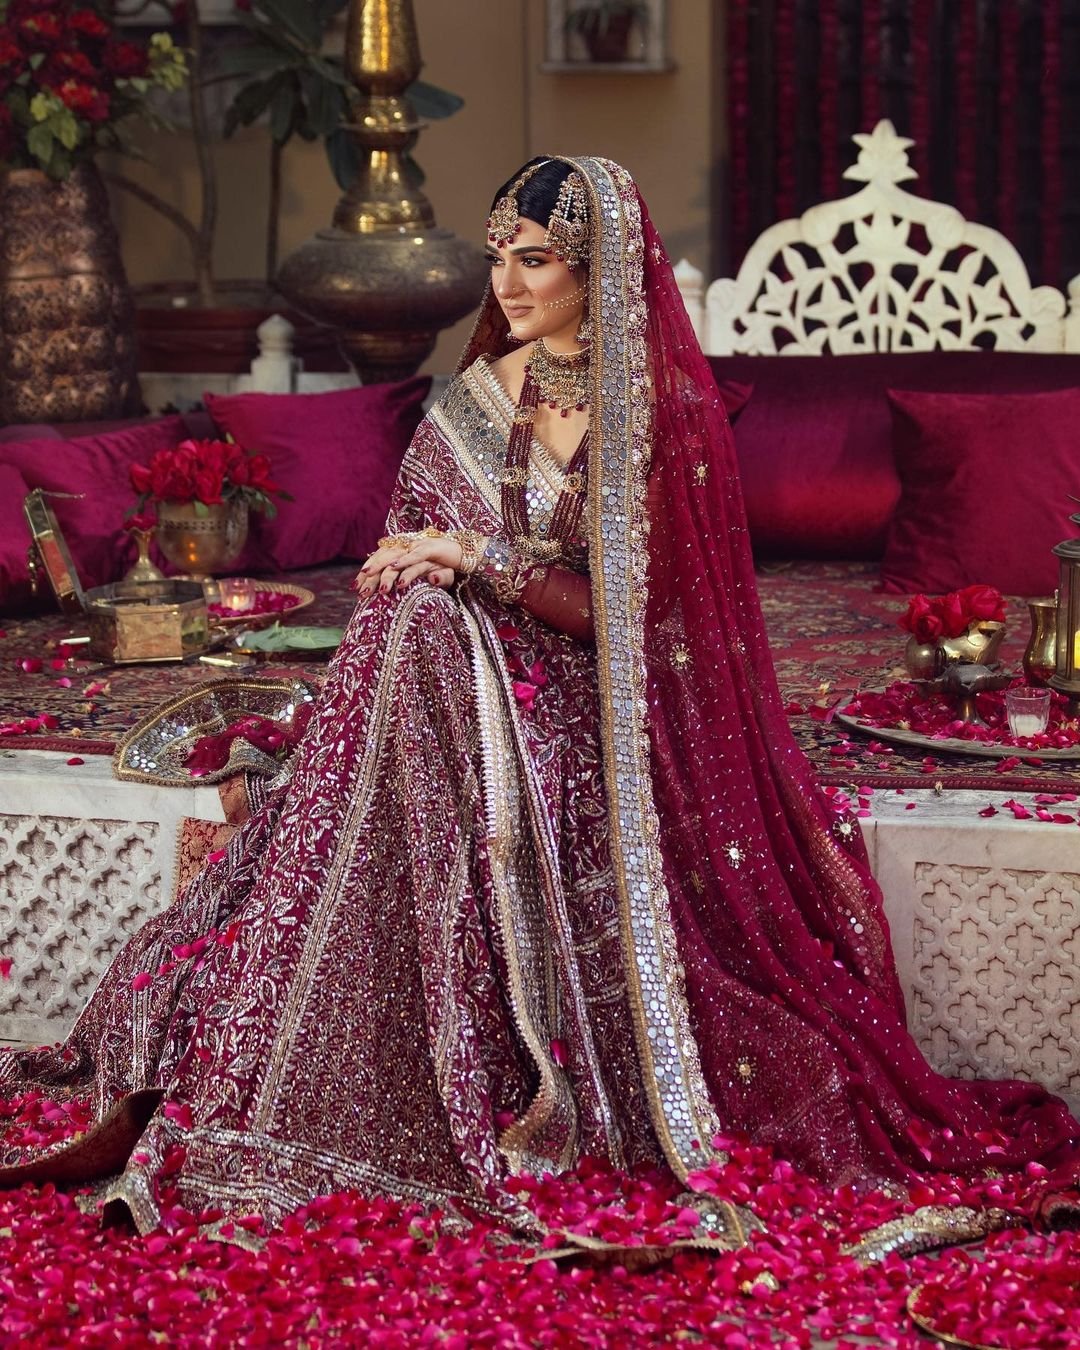 Sarah Khan stunts in New Bridal Photoshoot